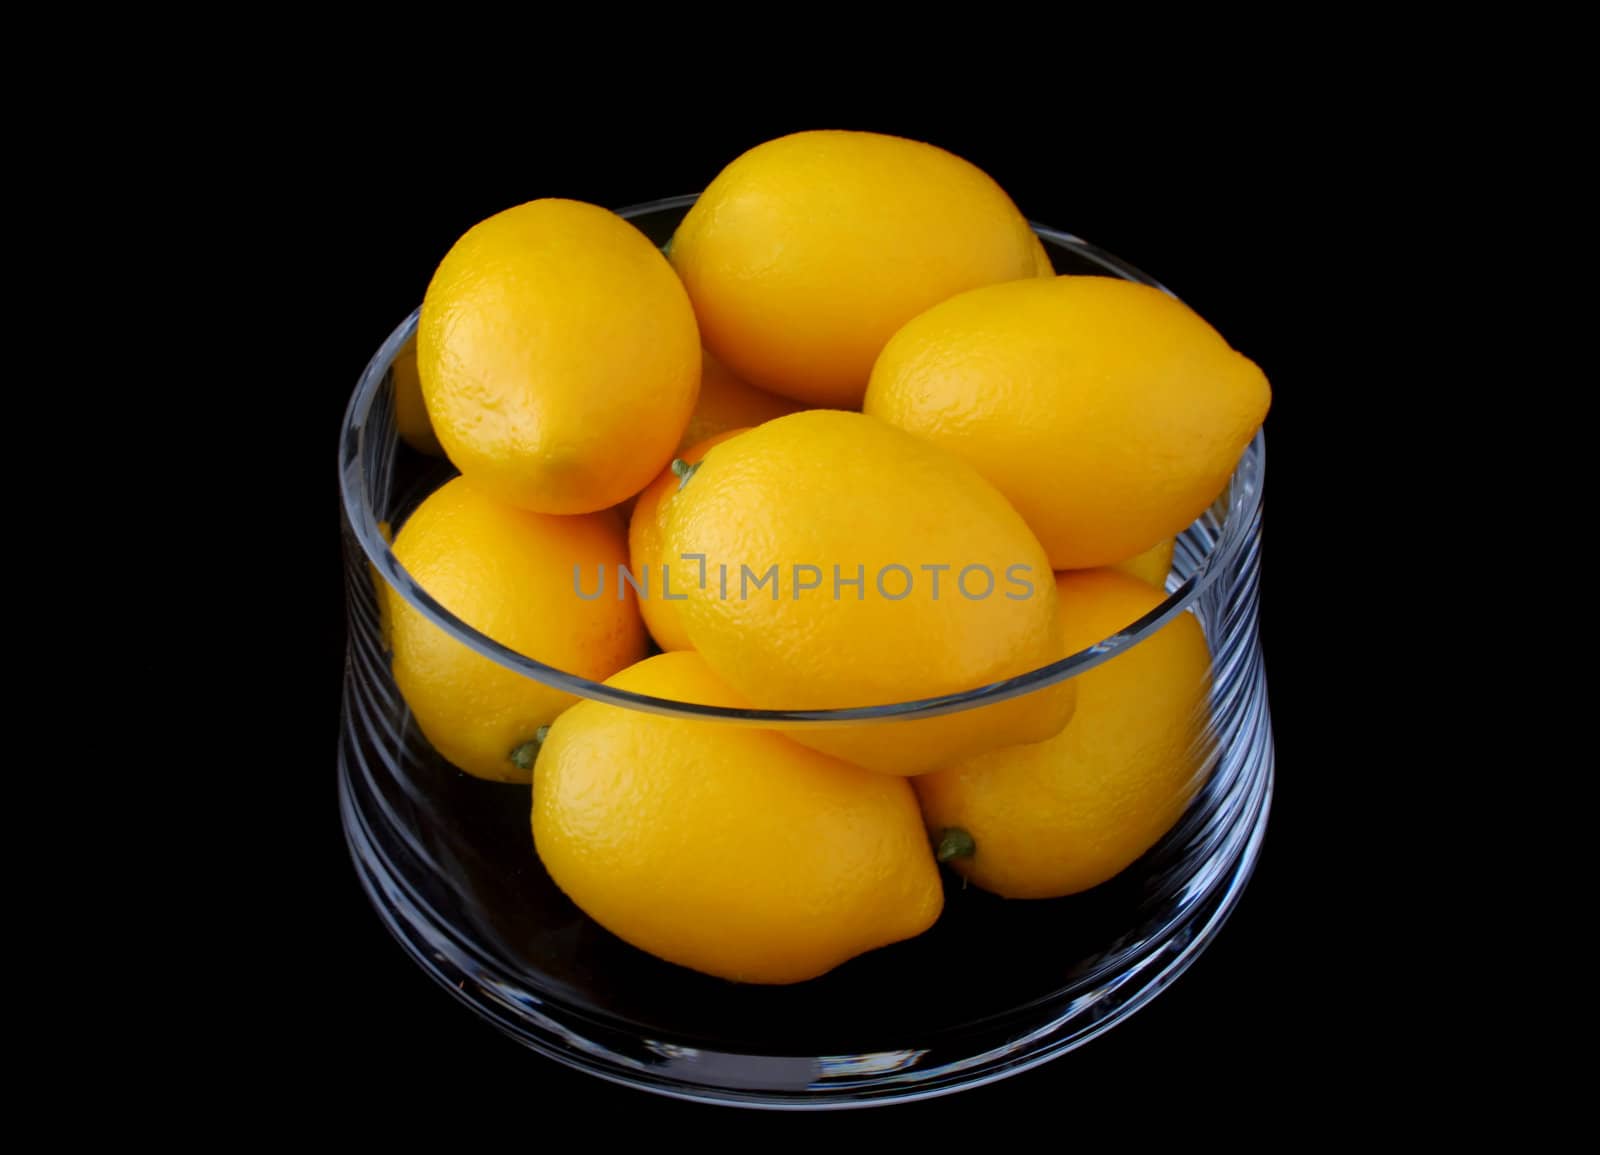 Lemons in a crystal bowl on a black background.

